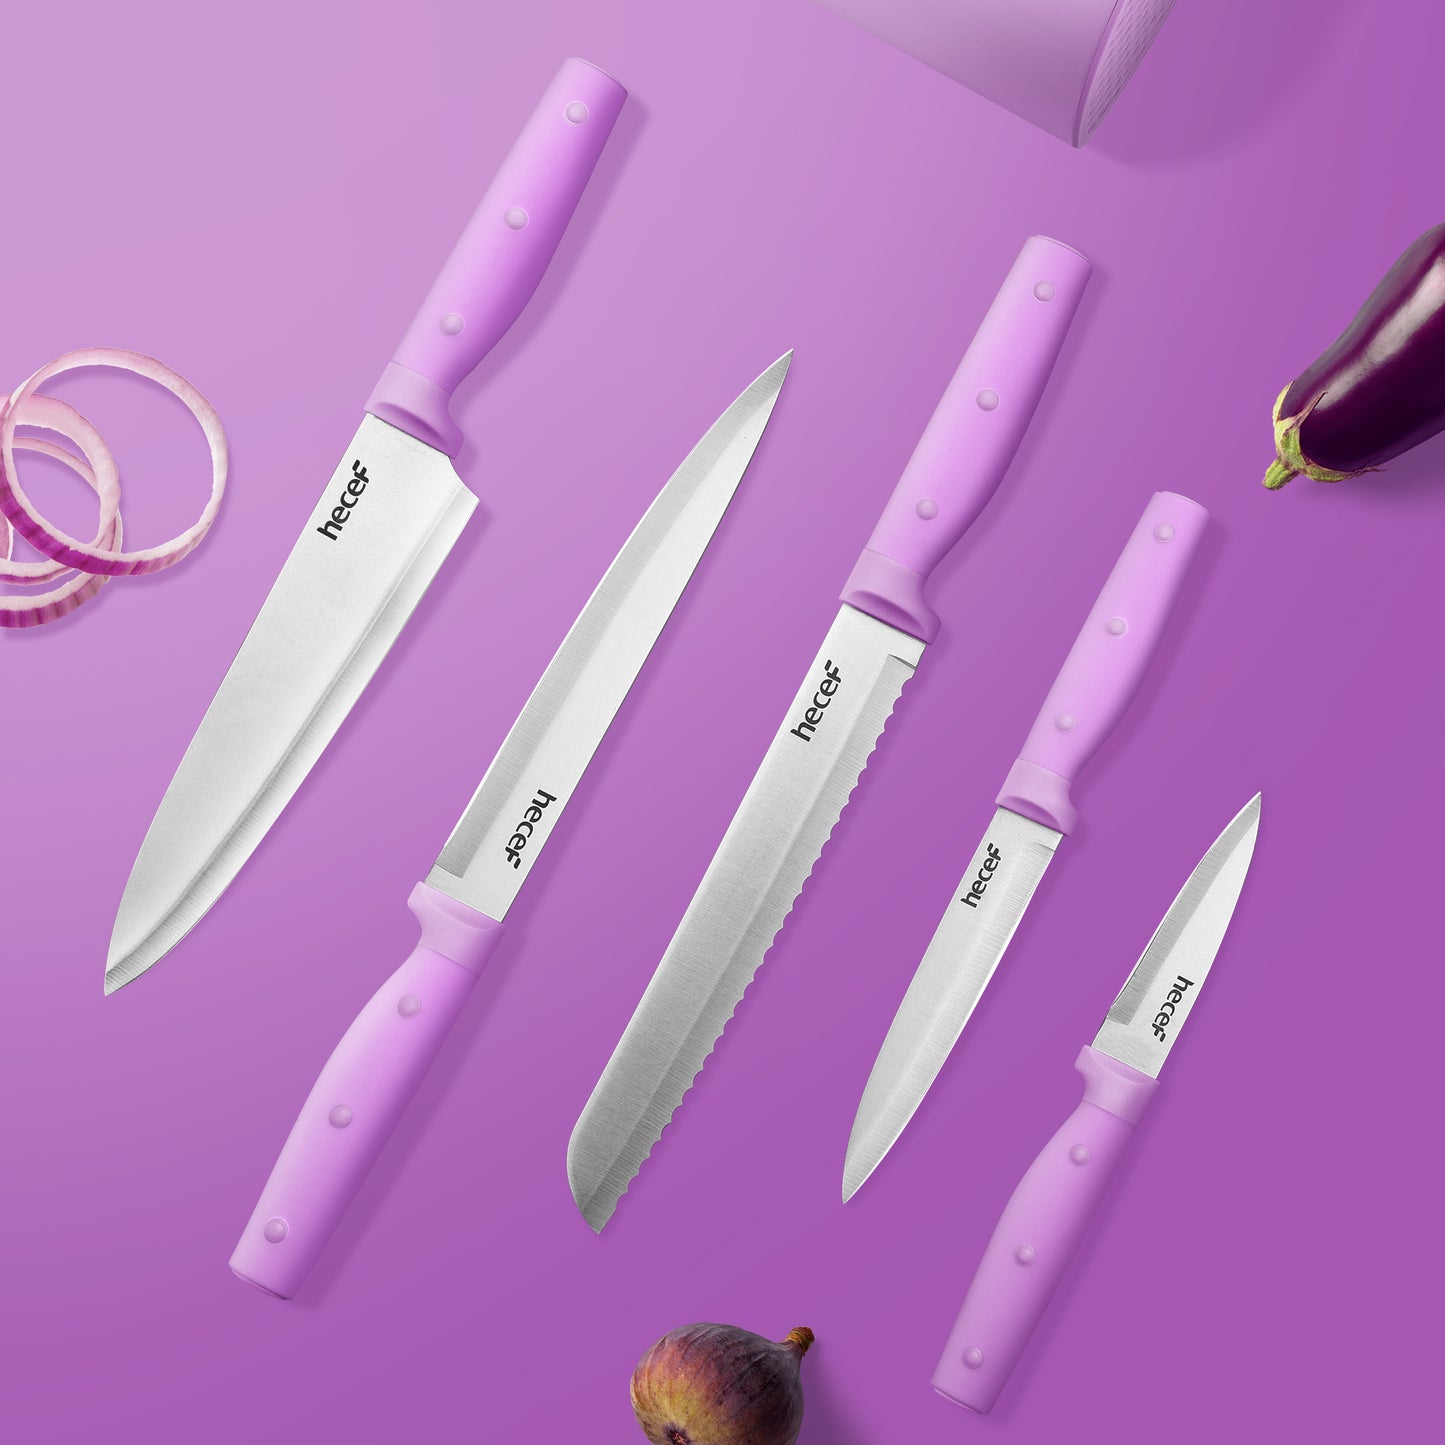 Hecef 6PCS Kitchen Knife Block Set with Universal Knife Block Holder, High Carbon Stainless Steel Pink Chef Knife Set - Hecef Kitchen